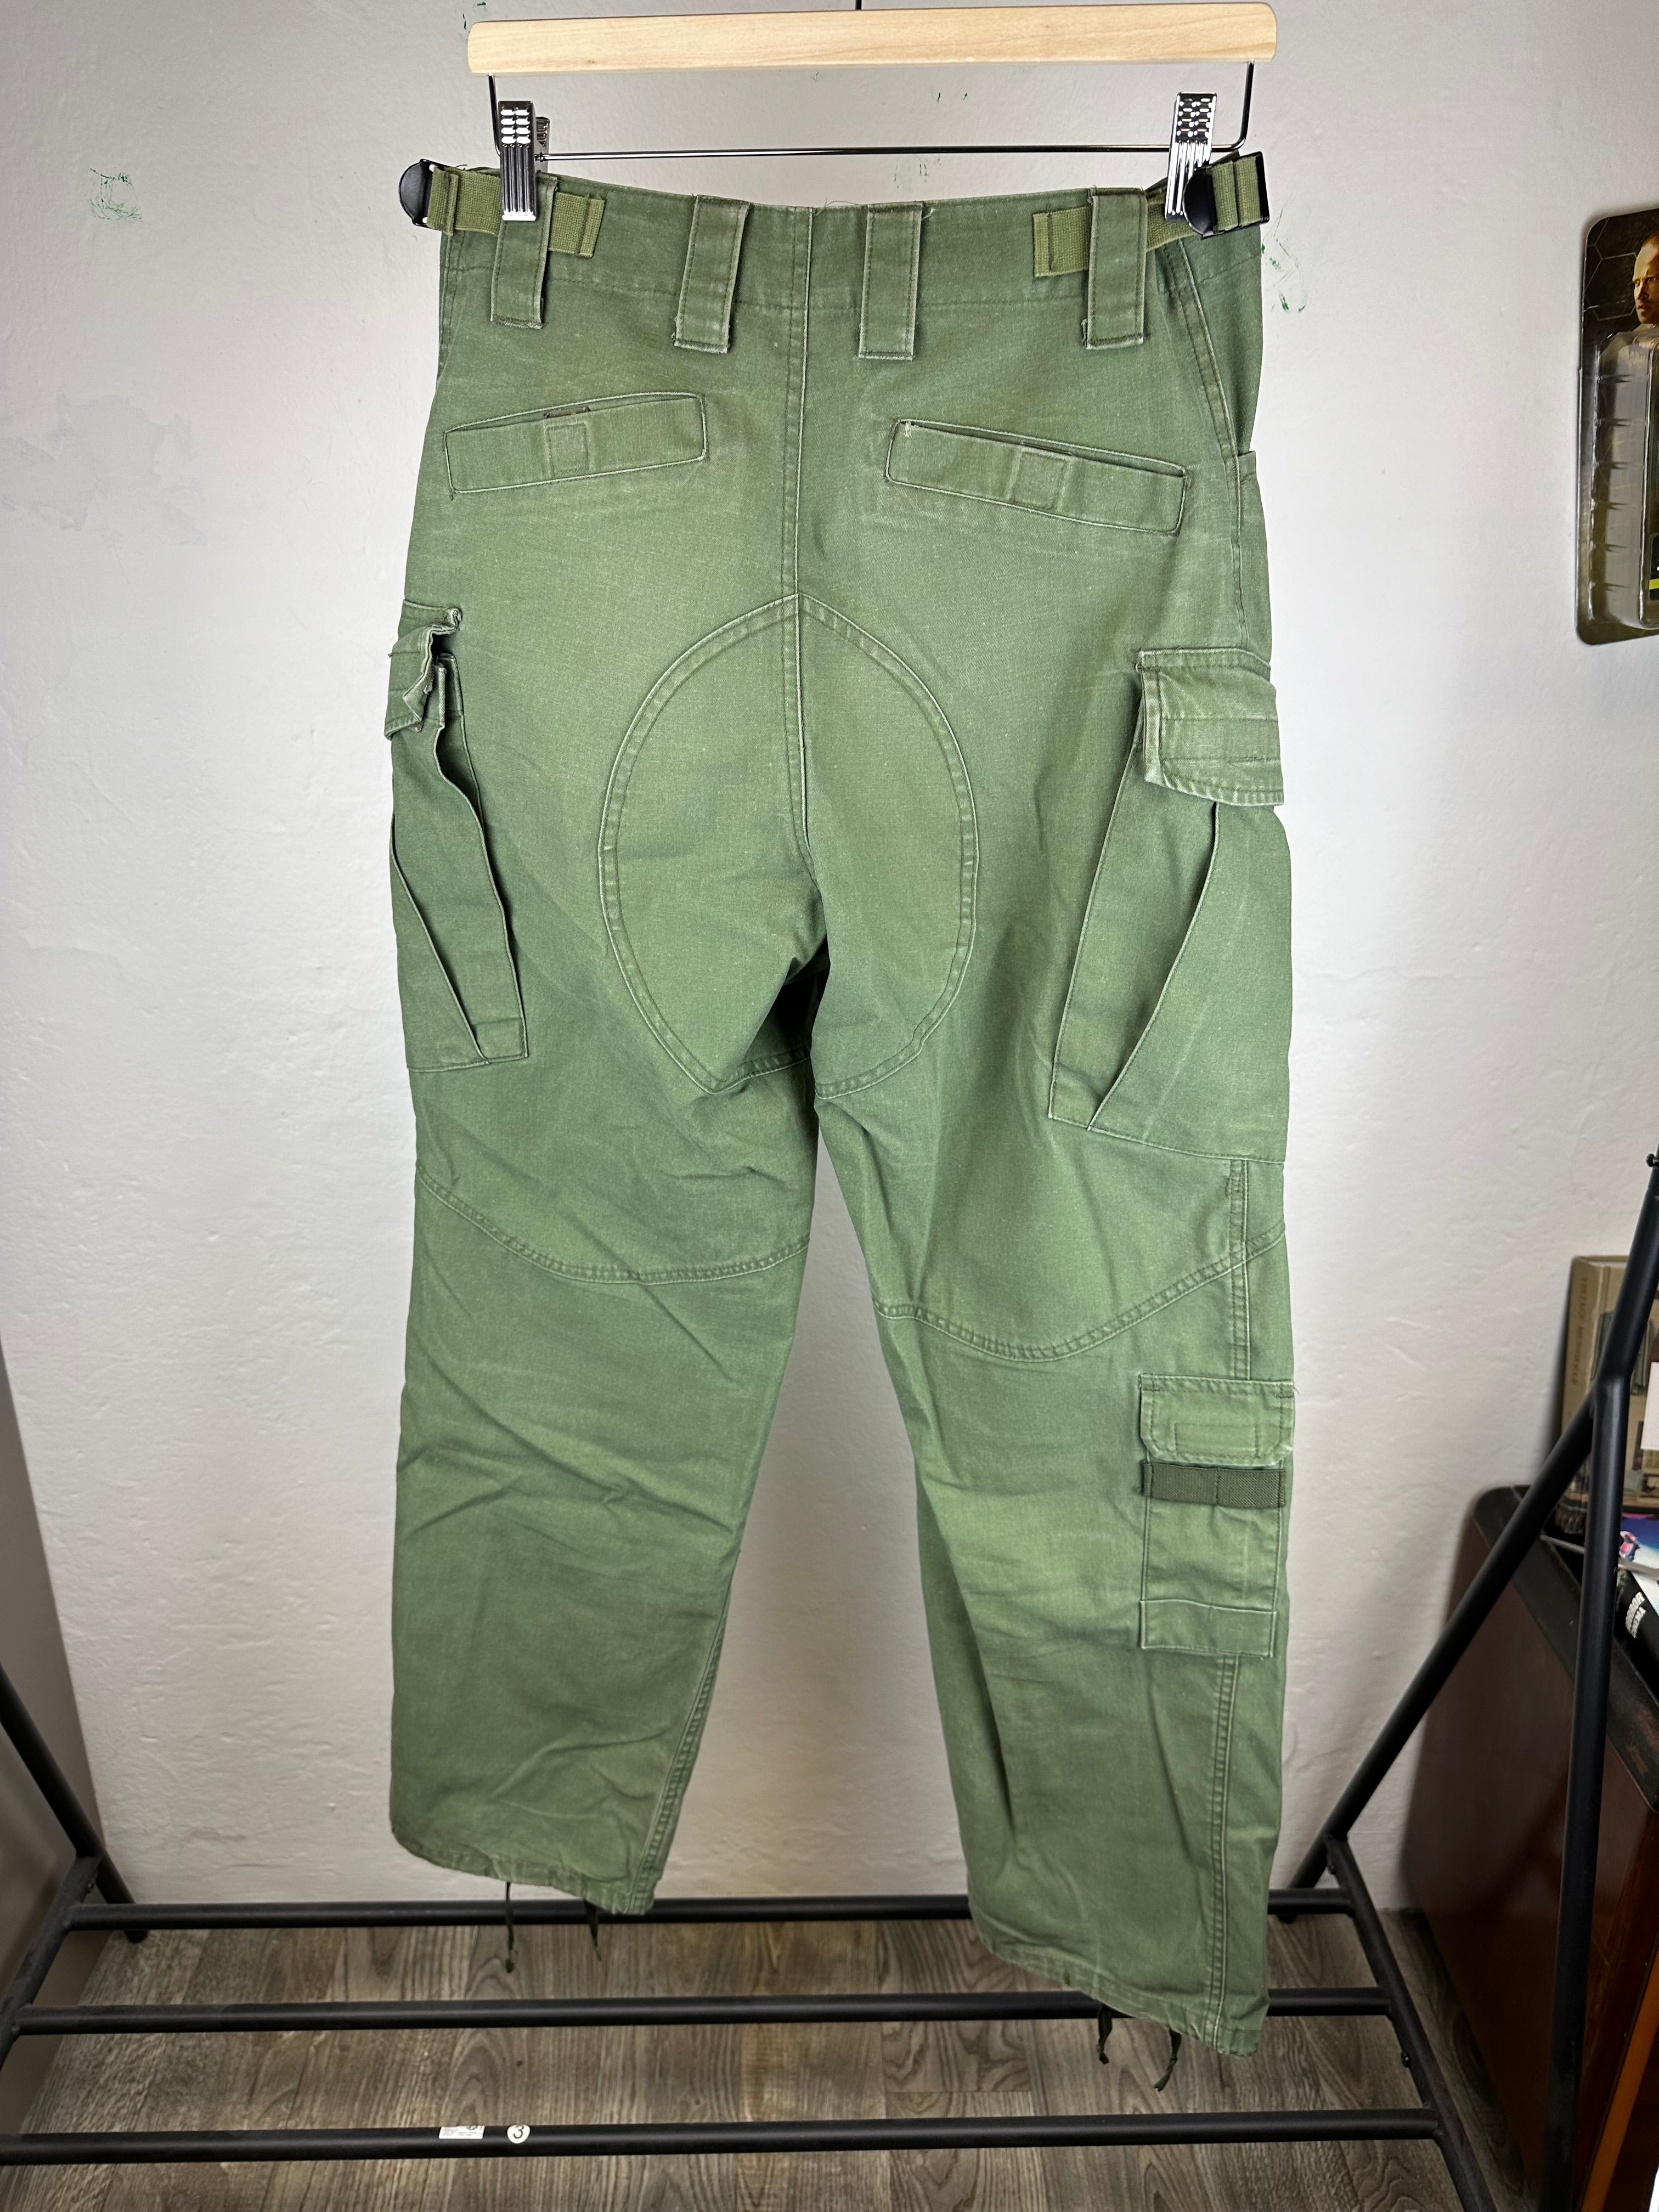 Vintage 80s Military Cargo Pants - size 30